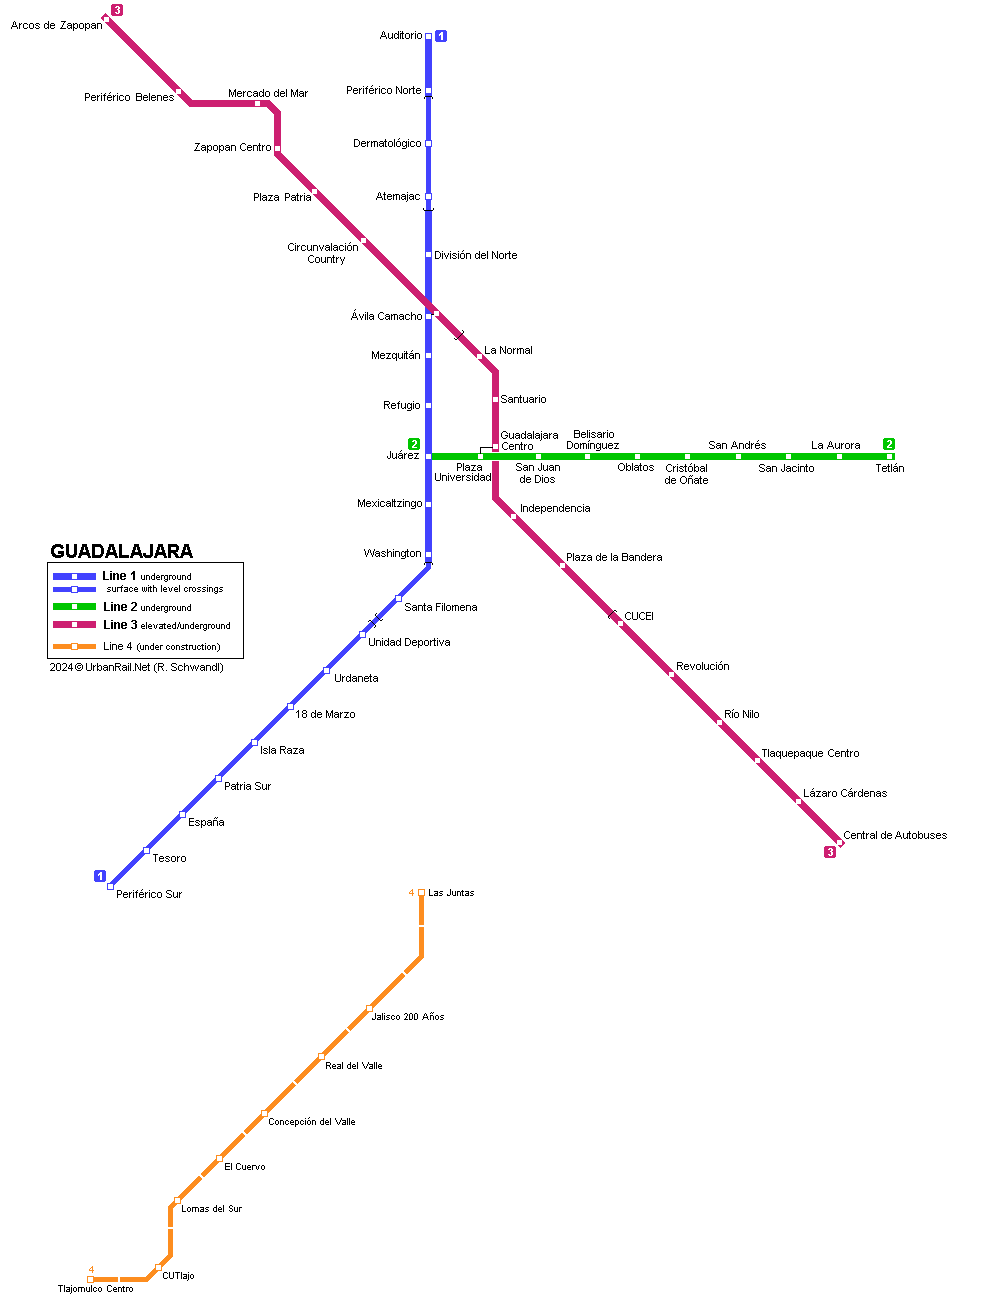 Guadalajara Light Rail Network  (c) UrbanRail.Net